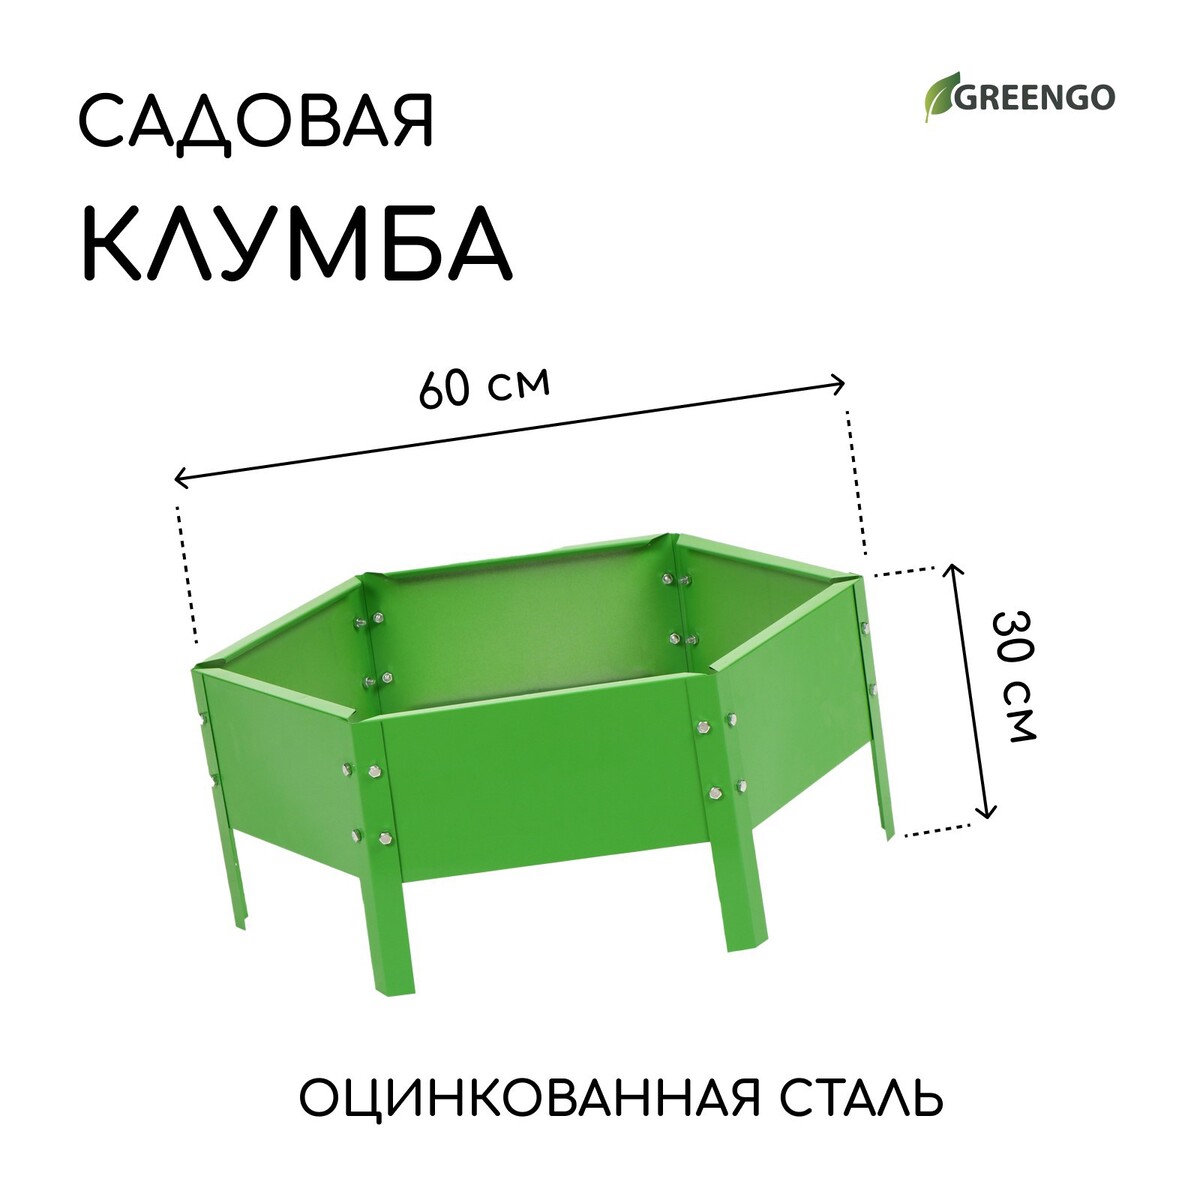 Клумба оцинкованная, d = 60 см, h = 15 см, ярко-зеленая, greengo краска ма 15 царицынские краски ярко зеленая 1 9кг